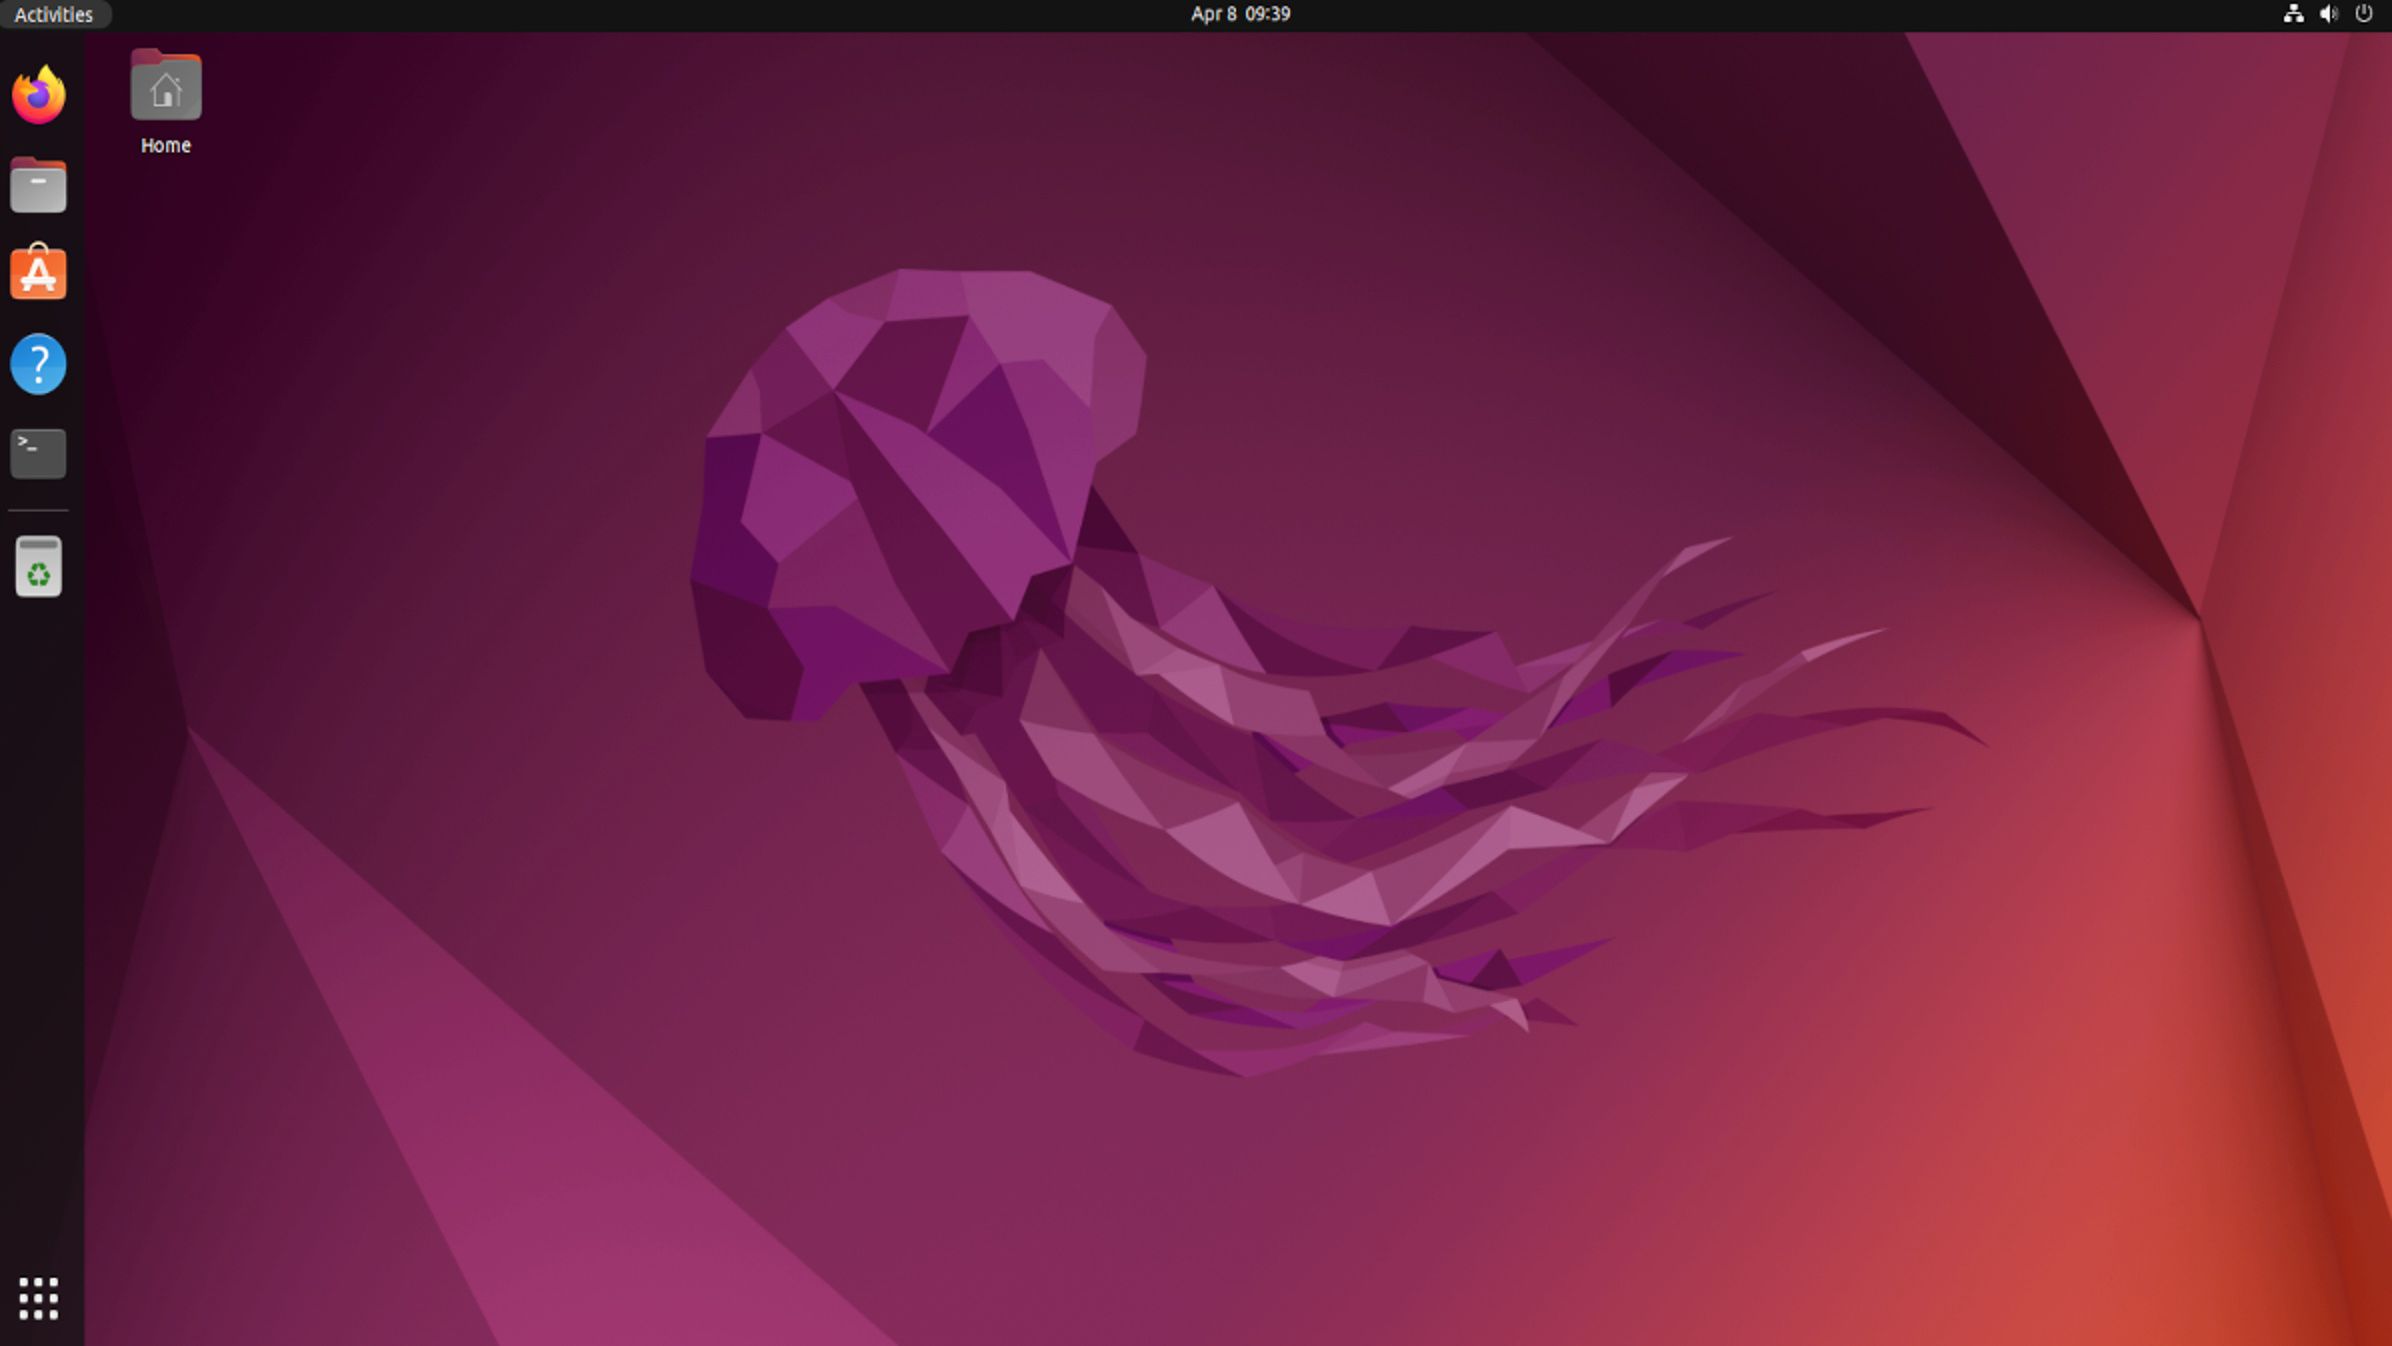 Ubuntu – Universo da leitura